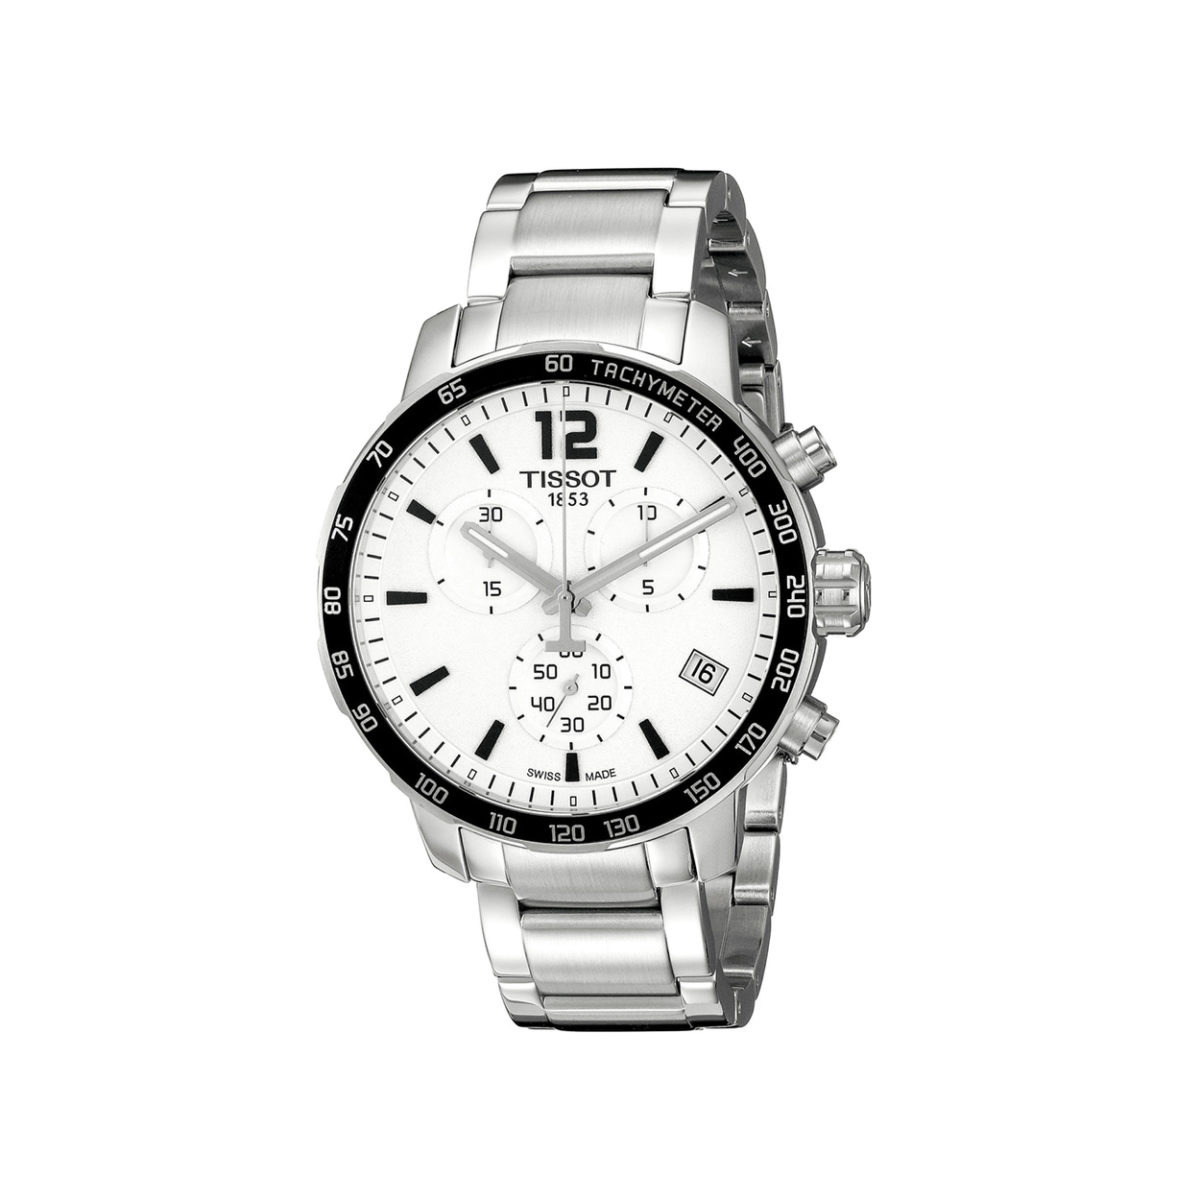 Tissot T-Sport Quickster Silver-Black Chronograph Men's Watch - T095.417.11.037.00